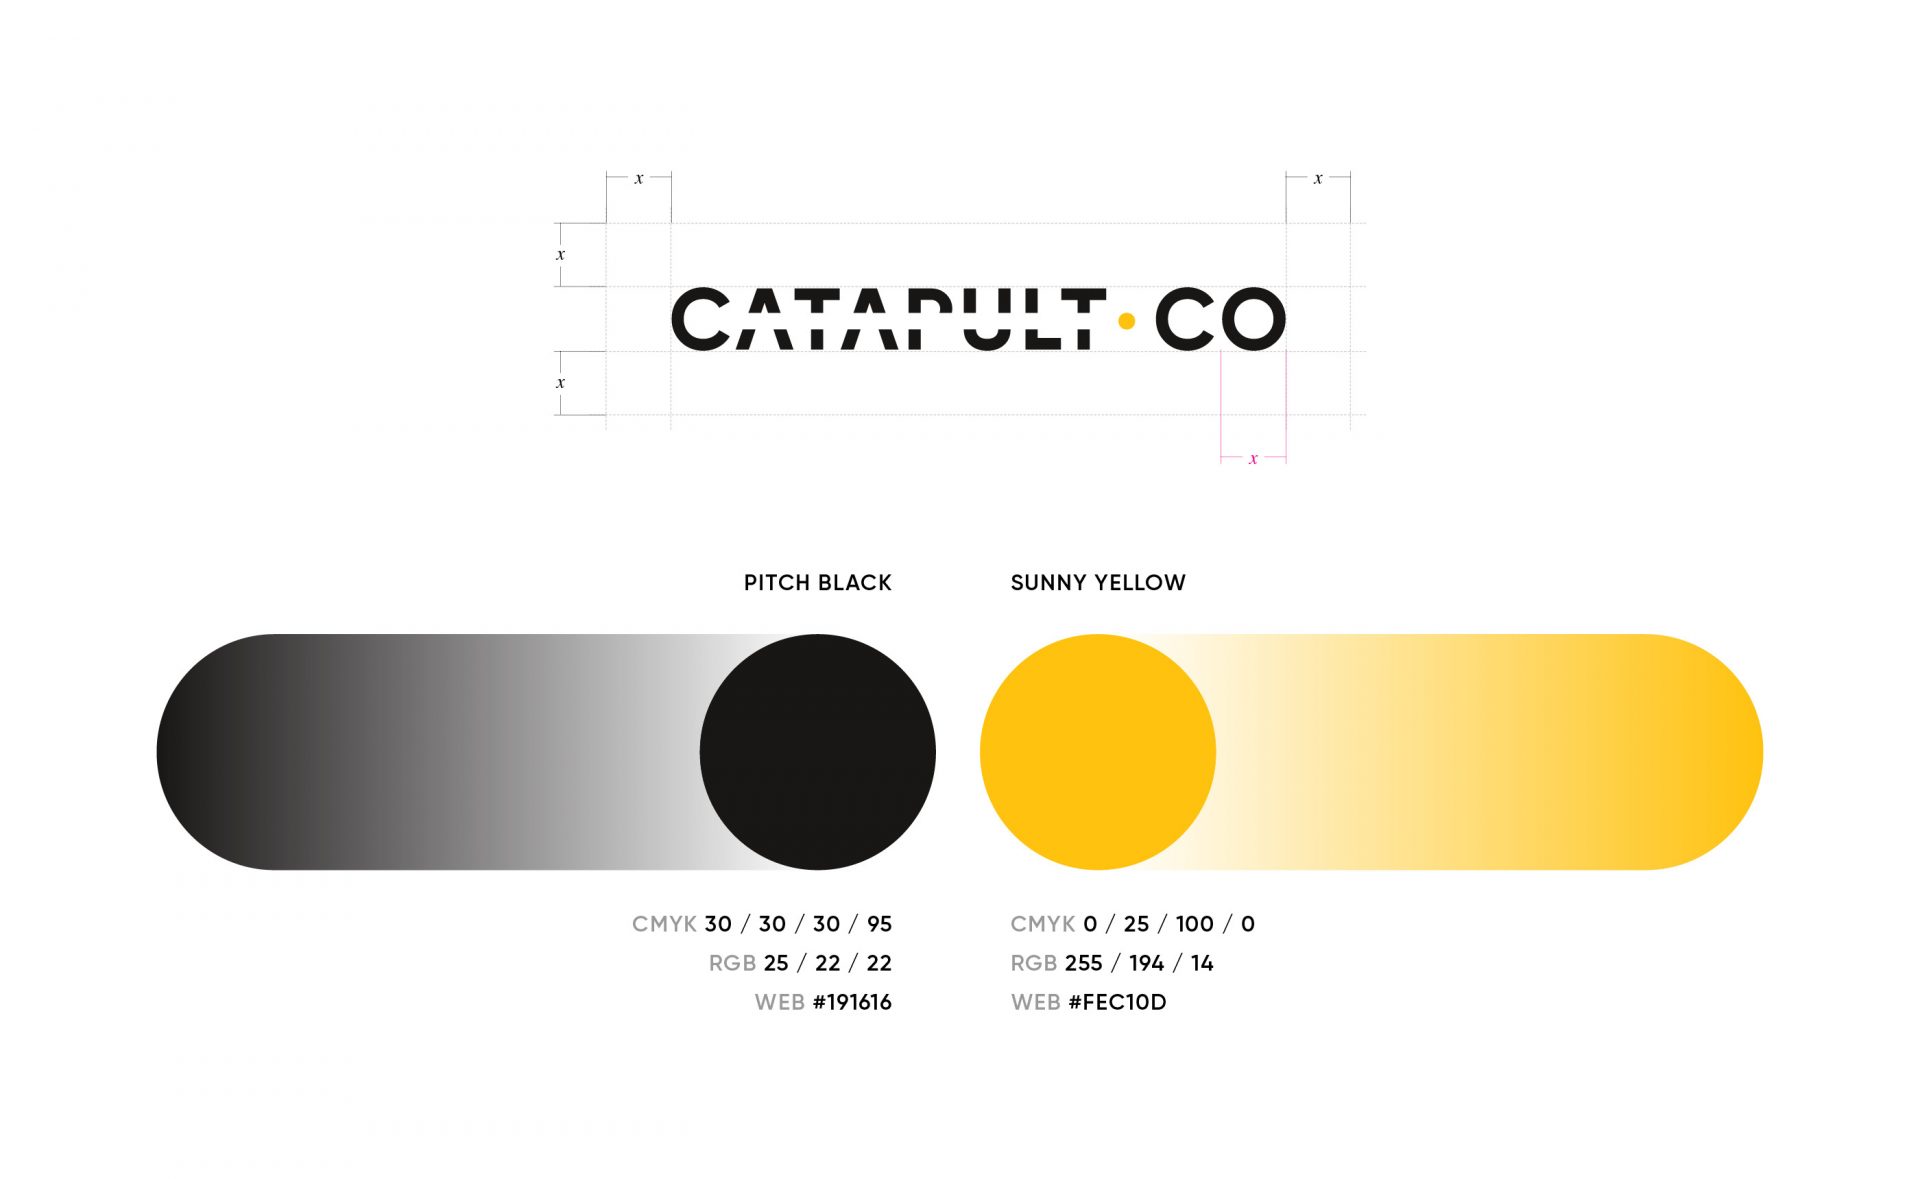 Catapult Co